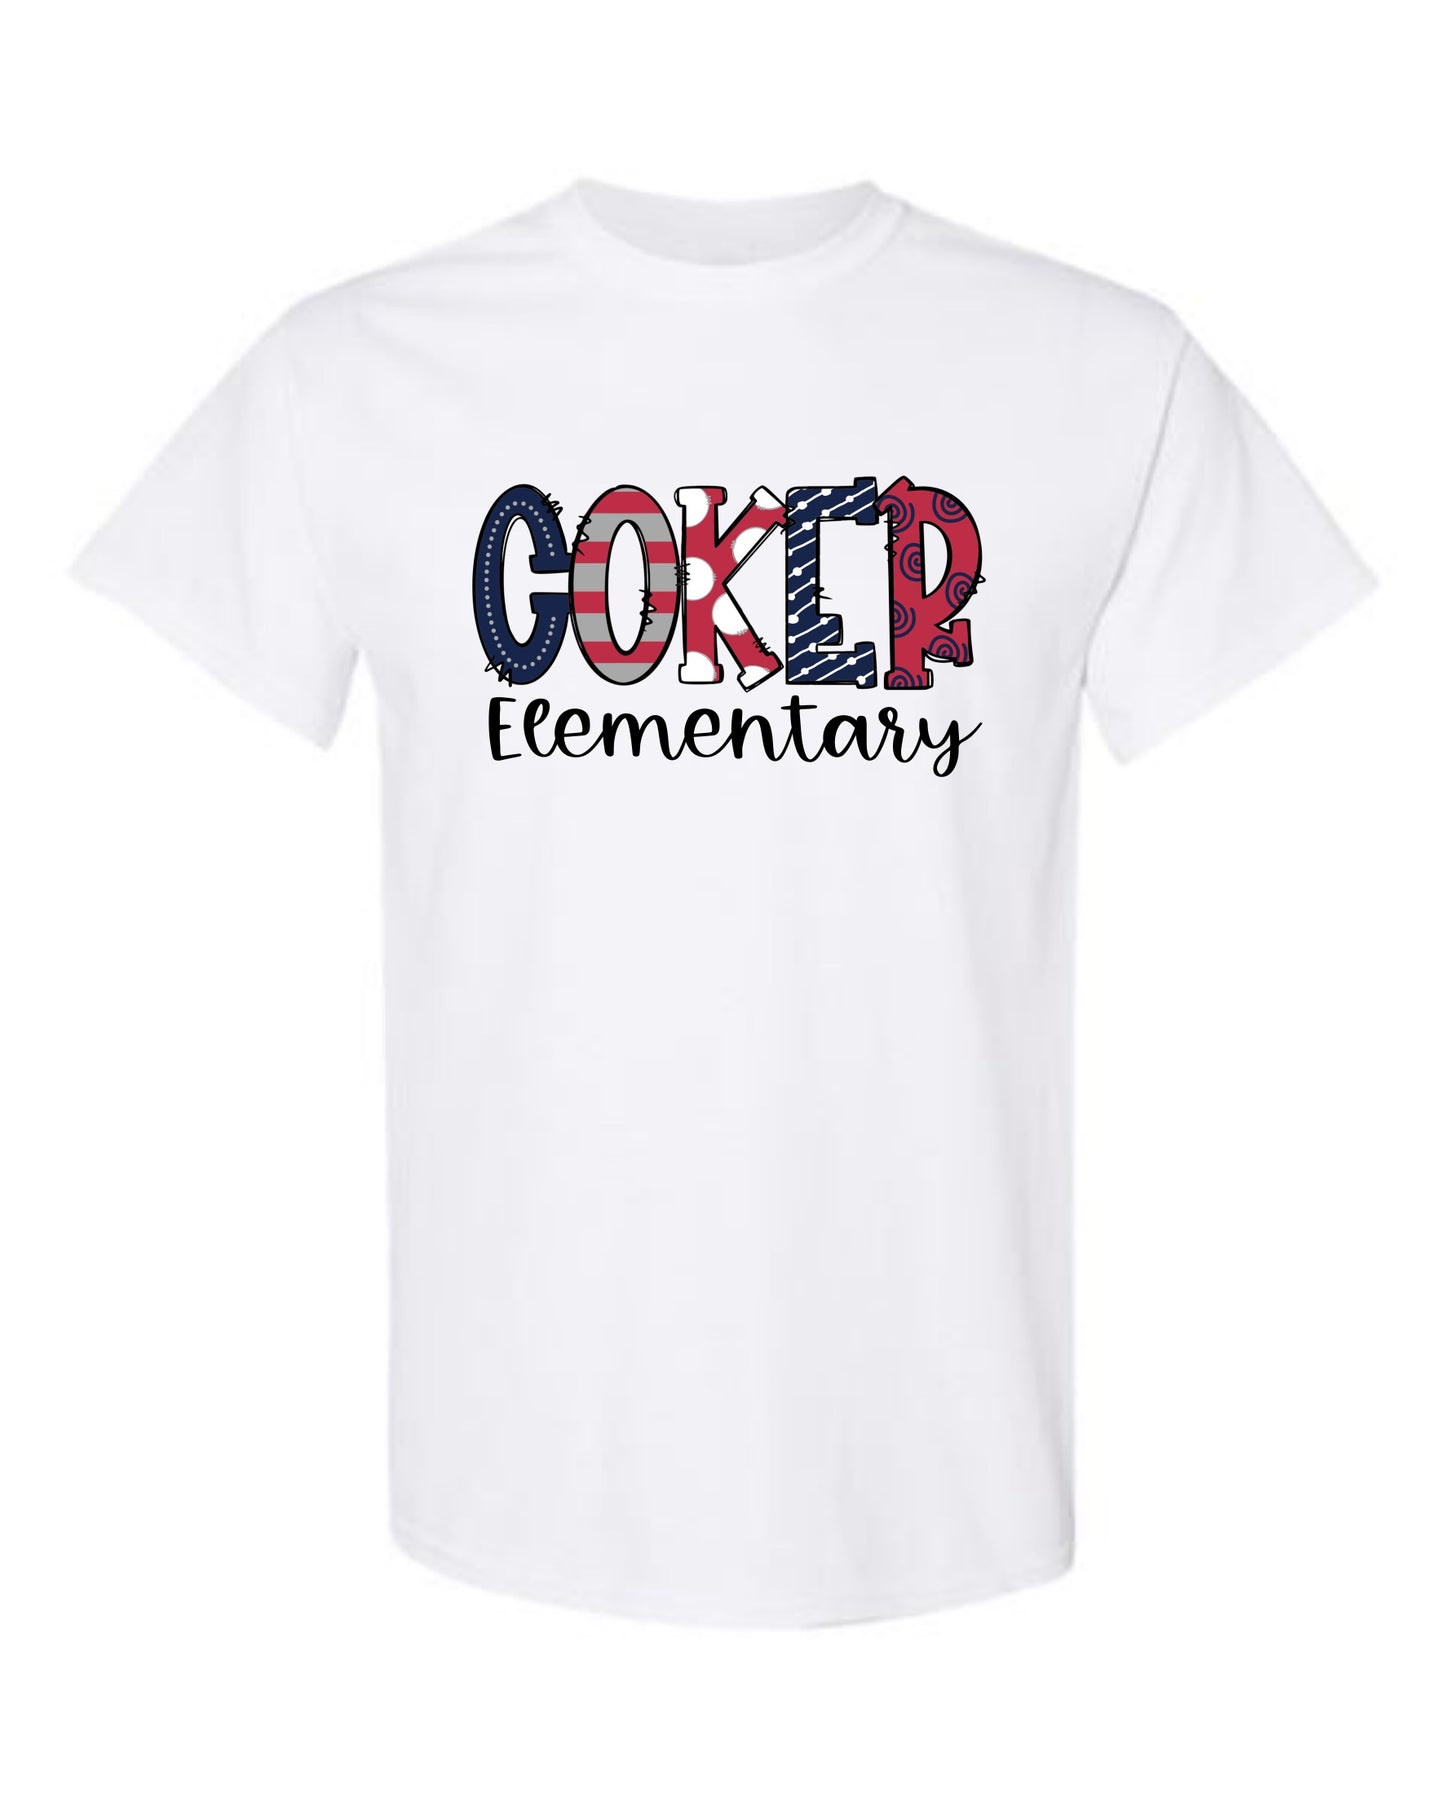 Coker Elementary Doodle Design Tshirt